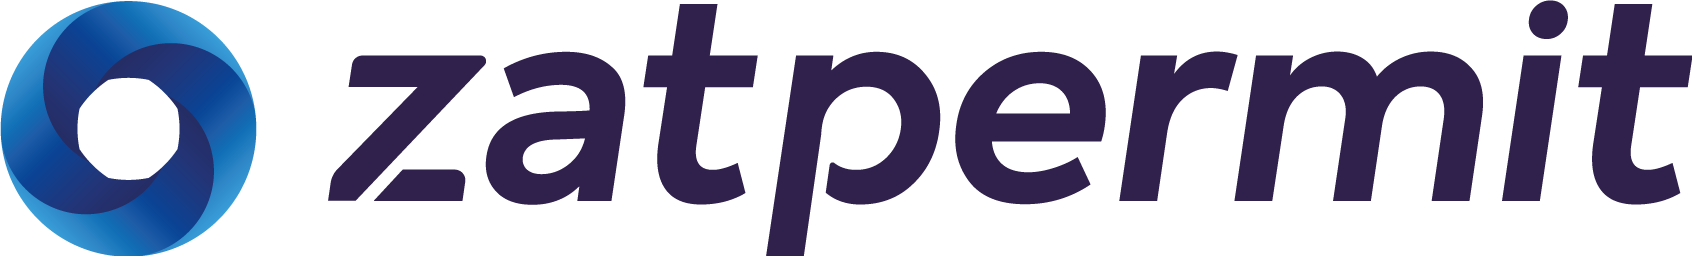 Zatpermit logo